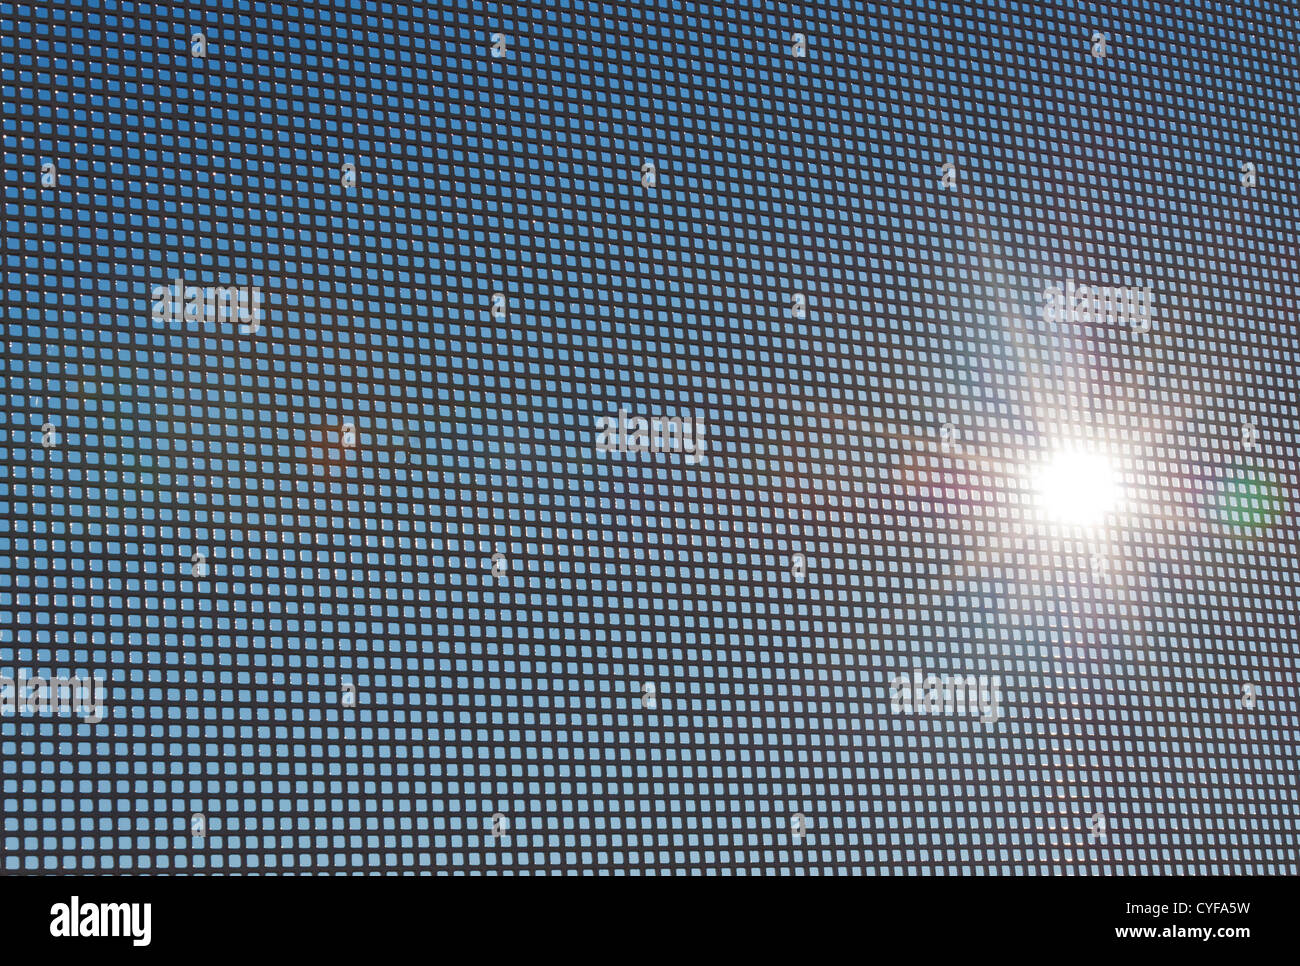 Gray grid on the sun bekgraunde Stock Photo